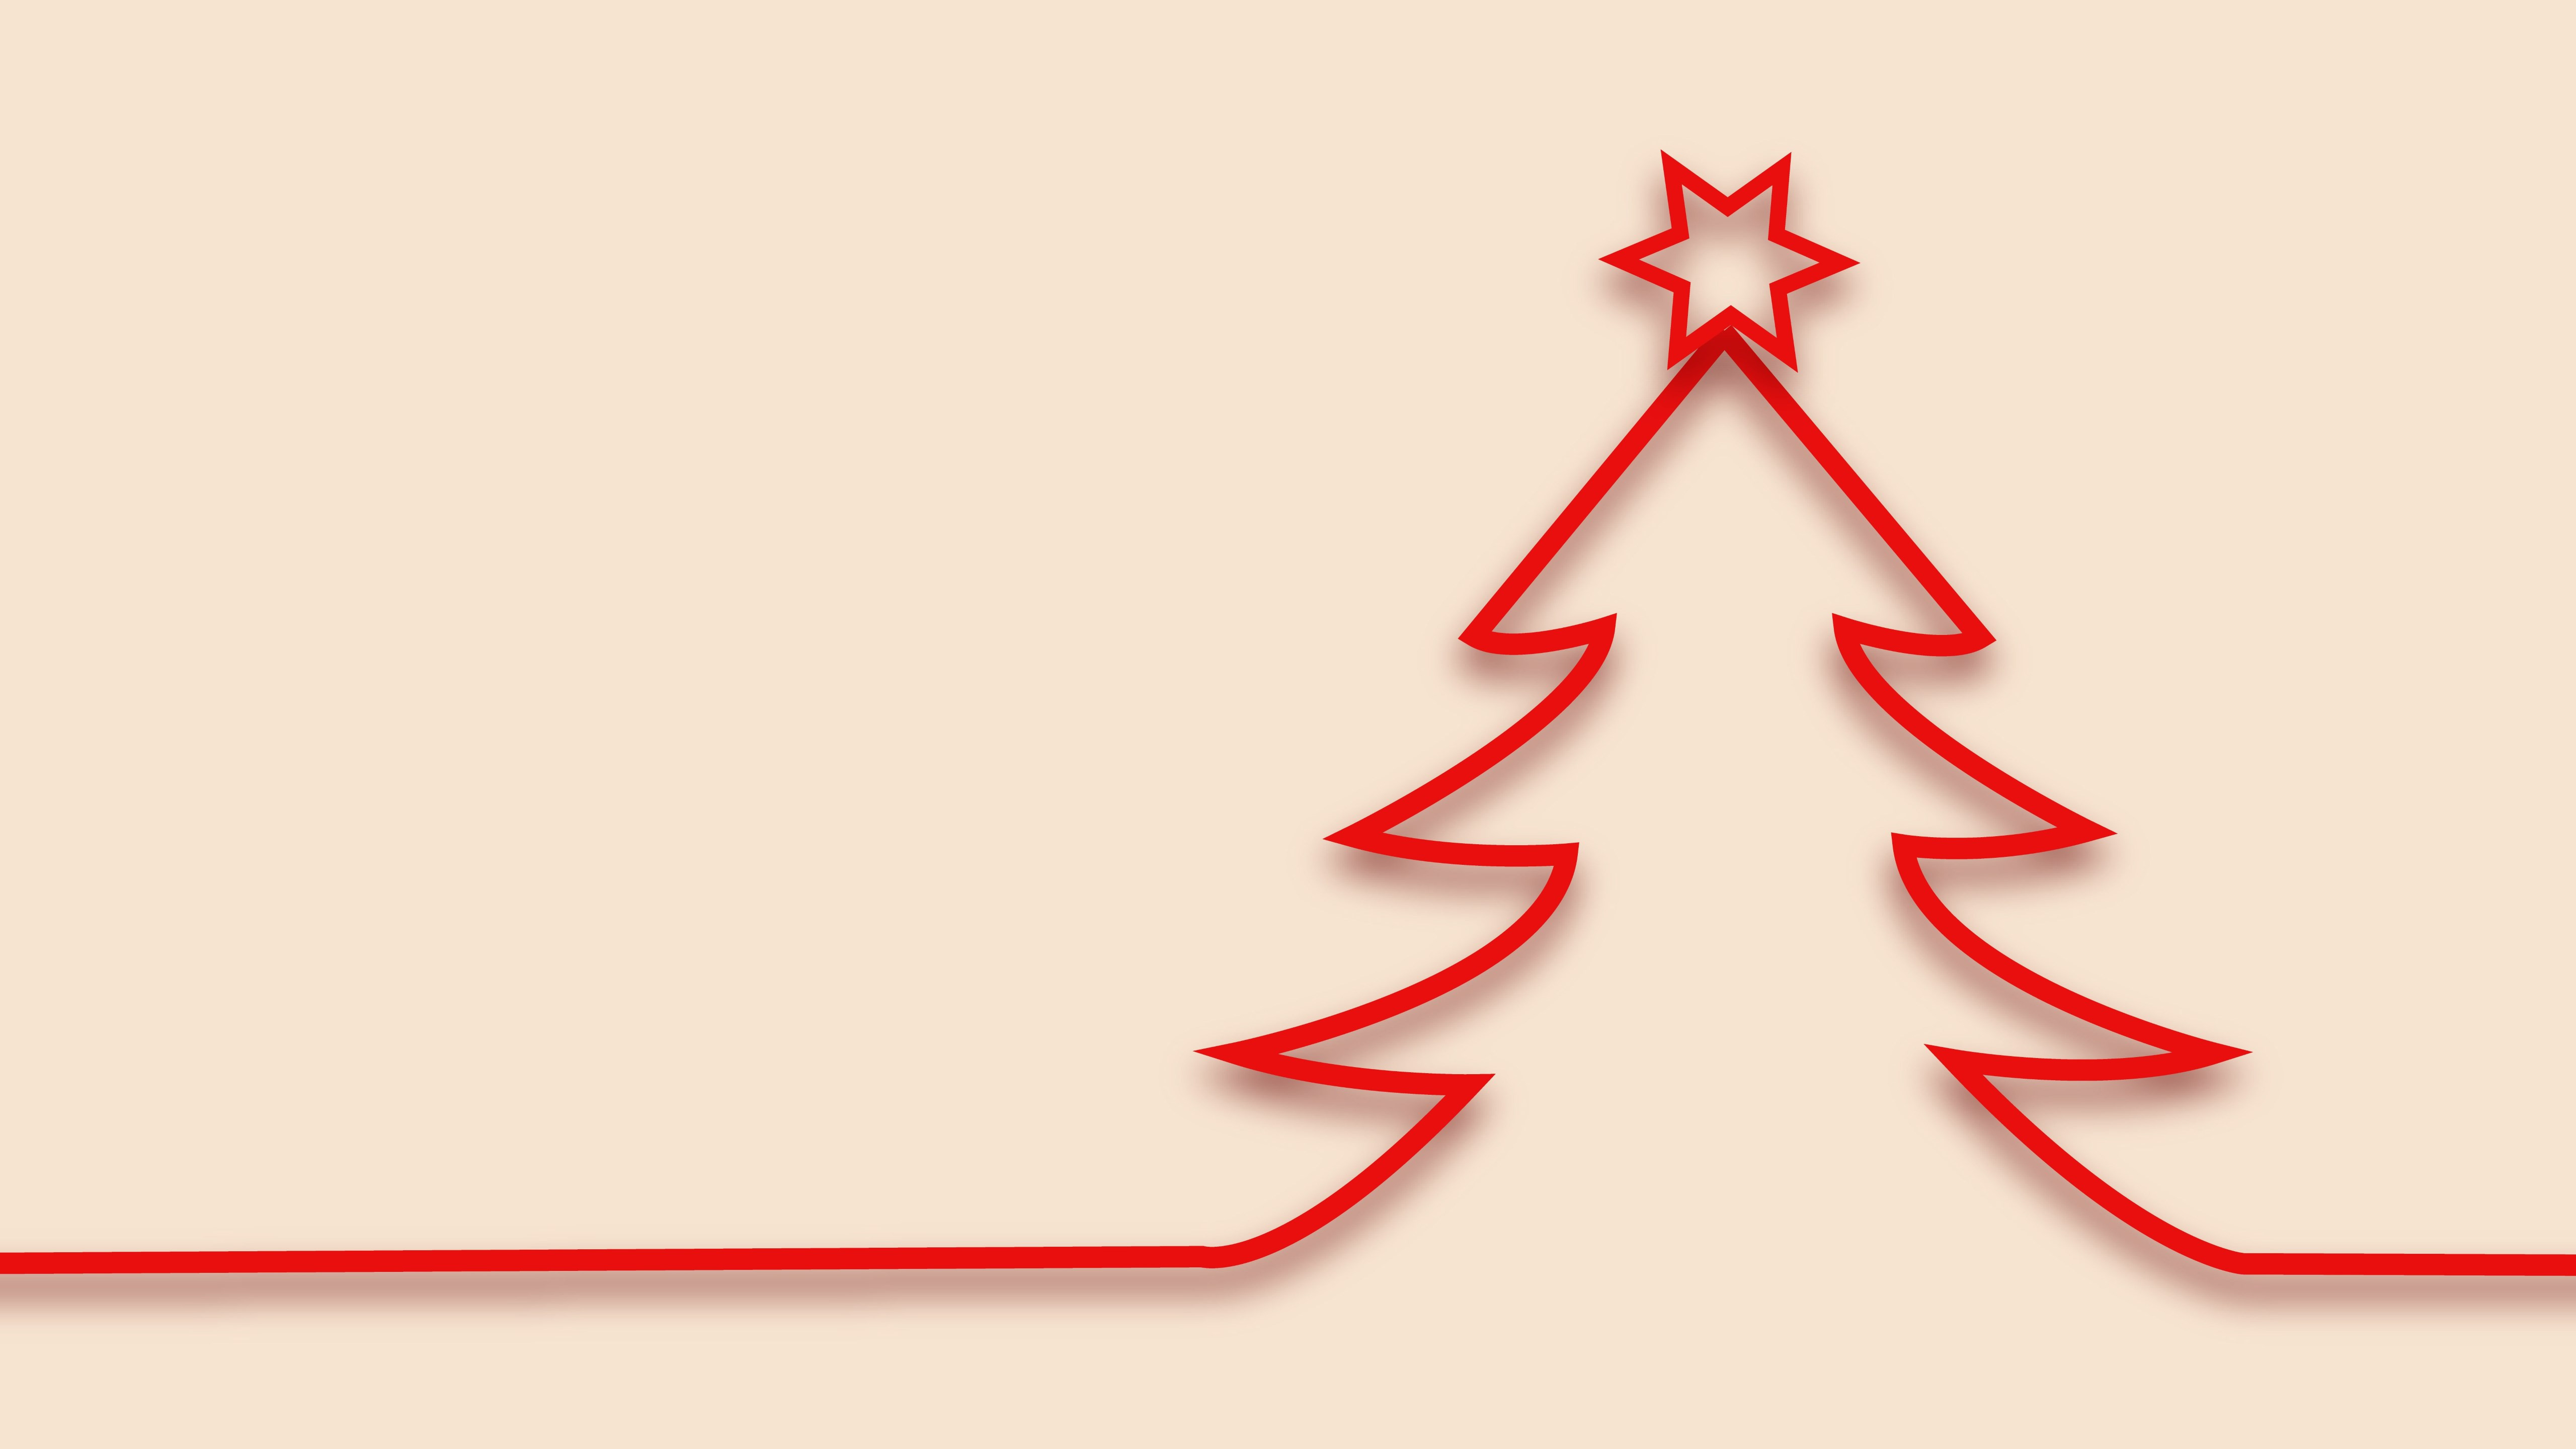 Red minimalistic Christmas tree design wallpaper 5120x2880